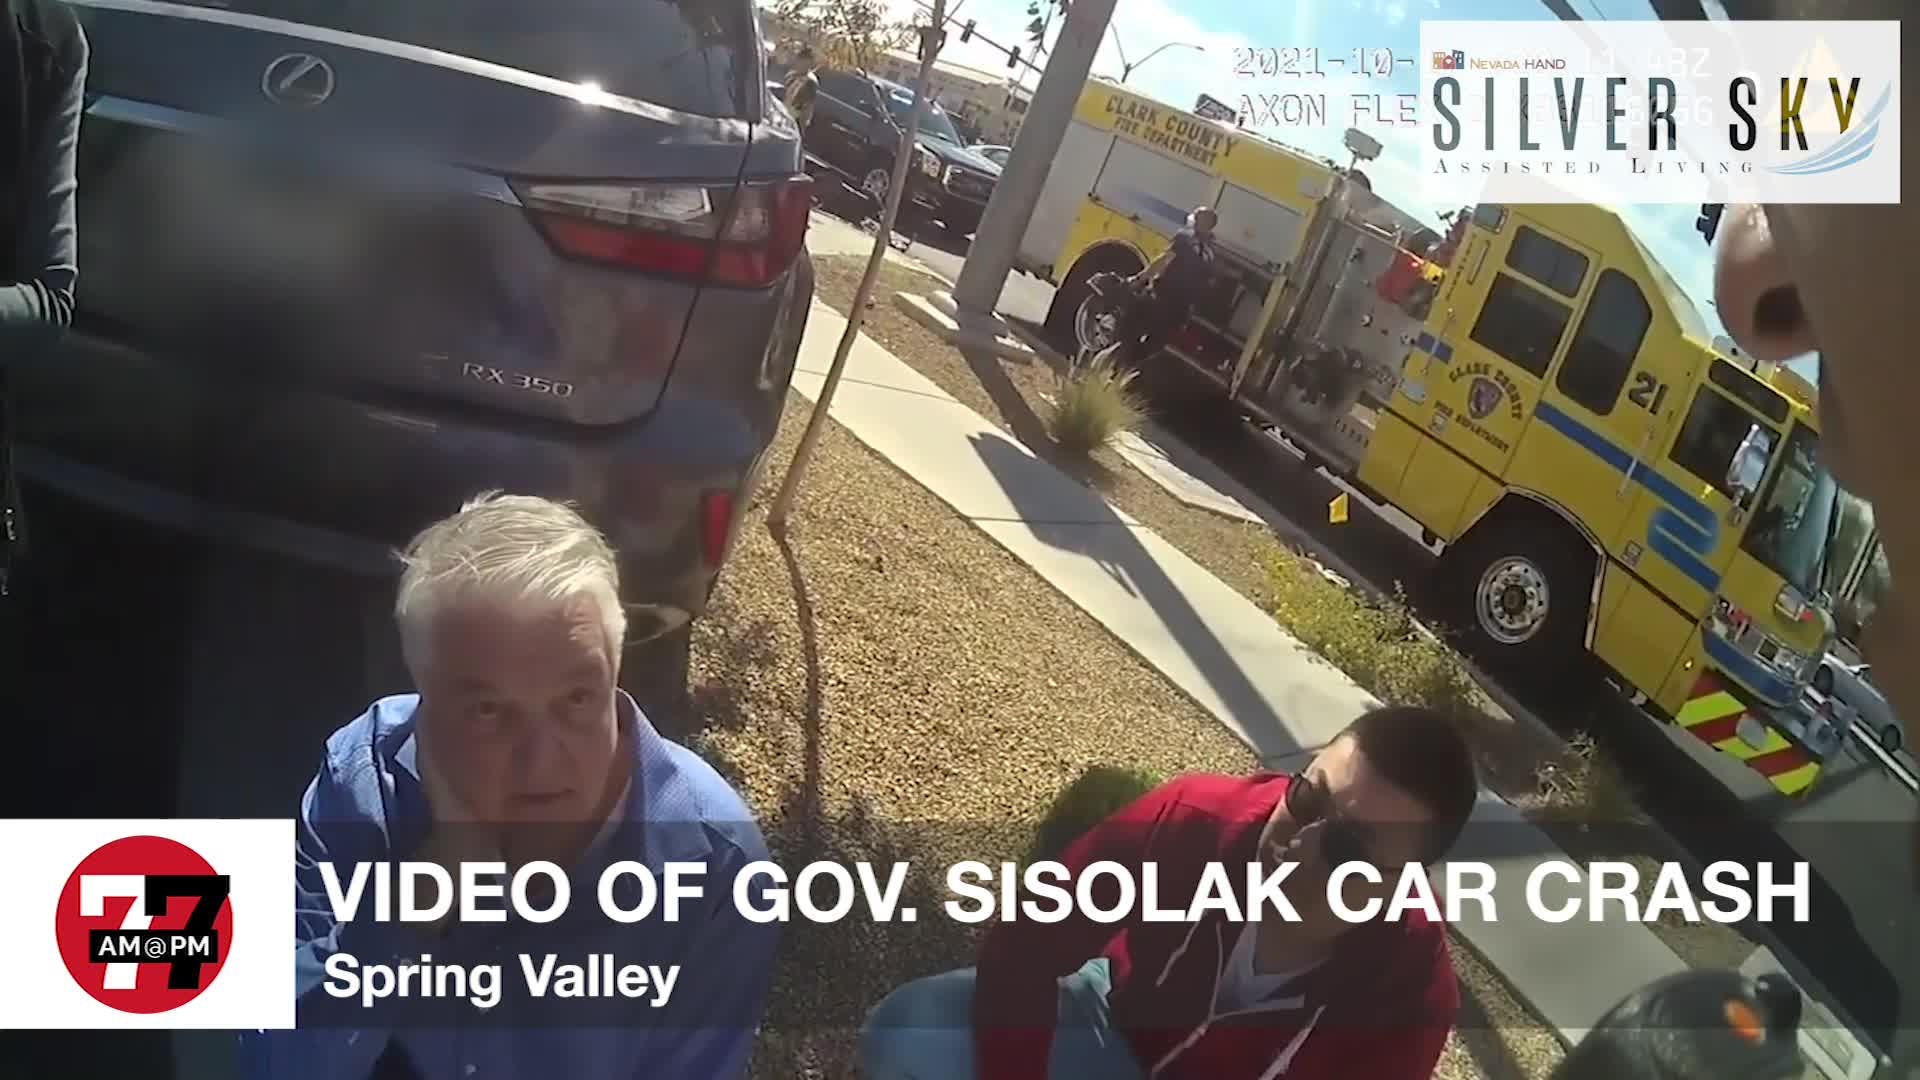 7@7PM Video of Governor Steve Sisolak’s Car Crash